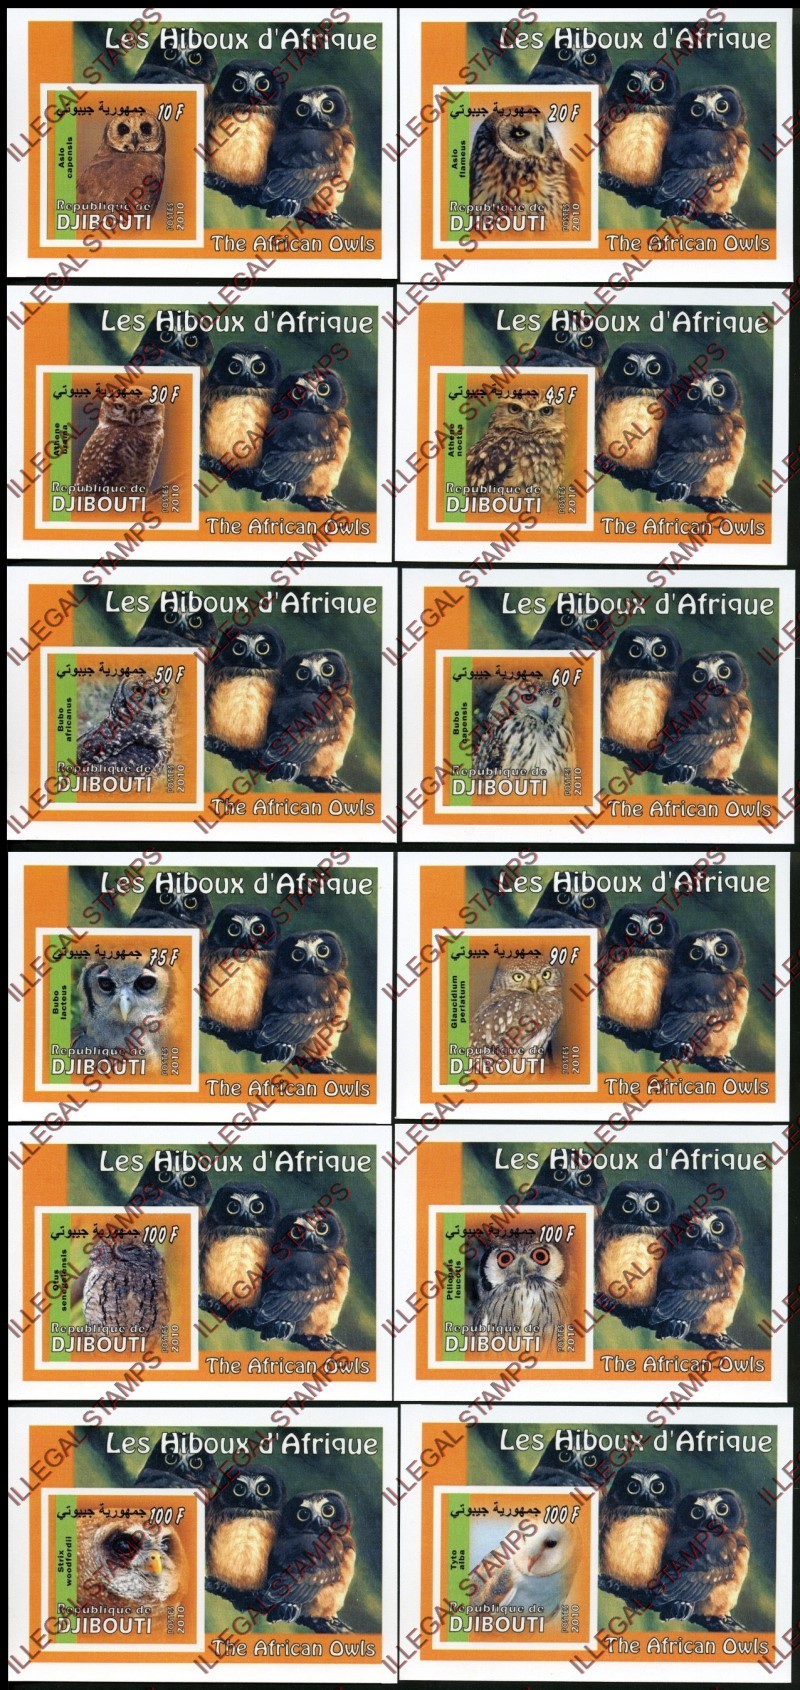 Djibouti 2010 Owls Illegal Stamp Souvenir Sheets of 1